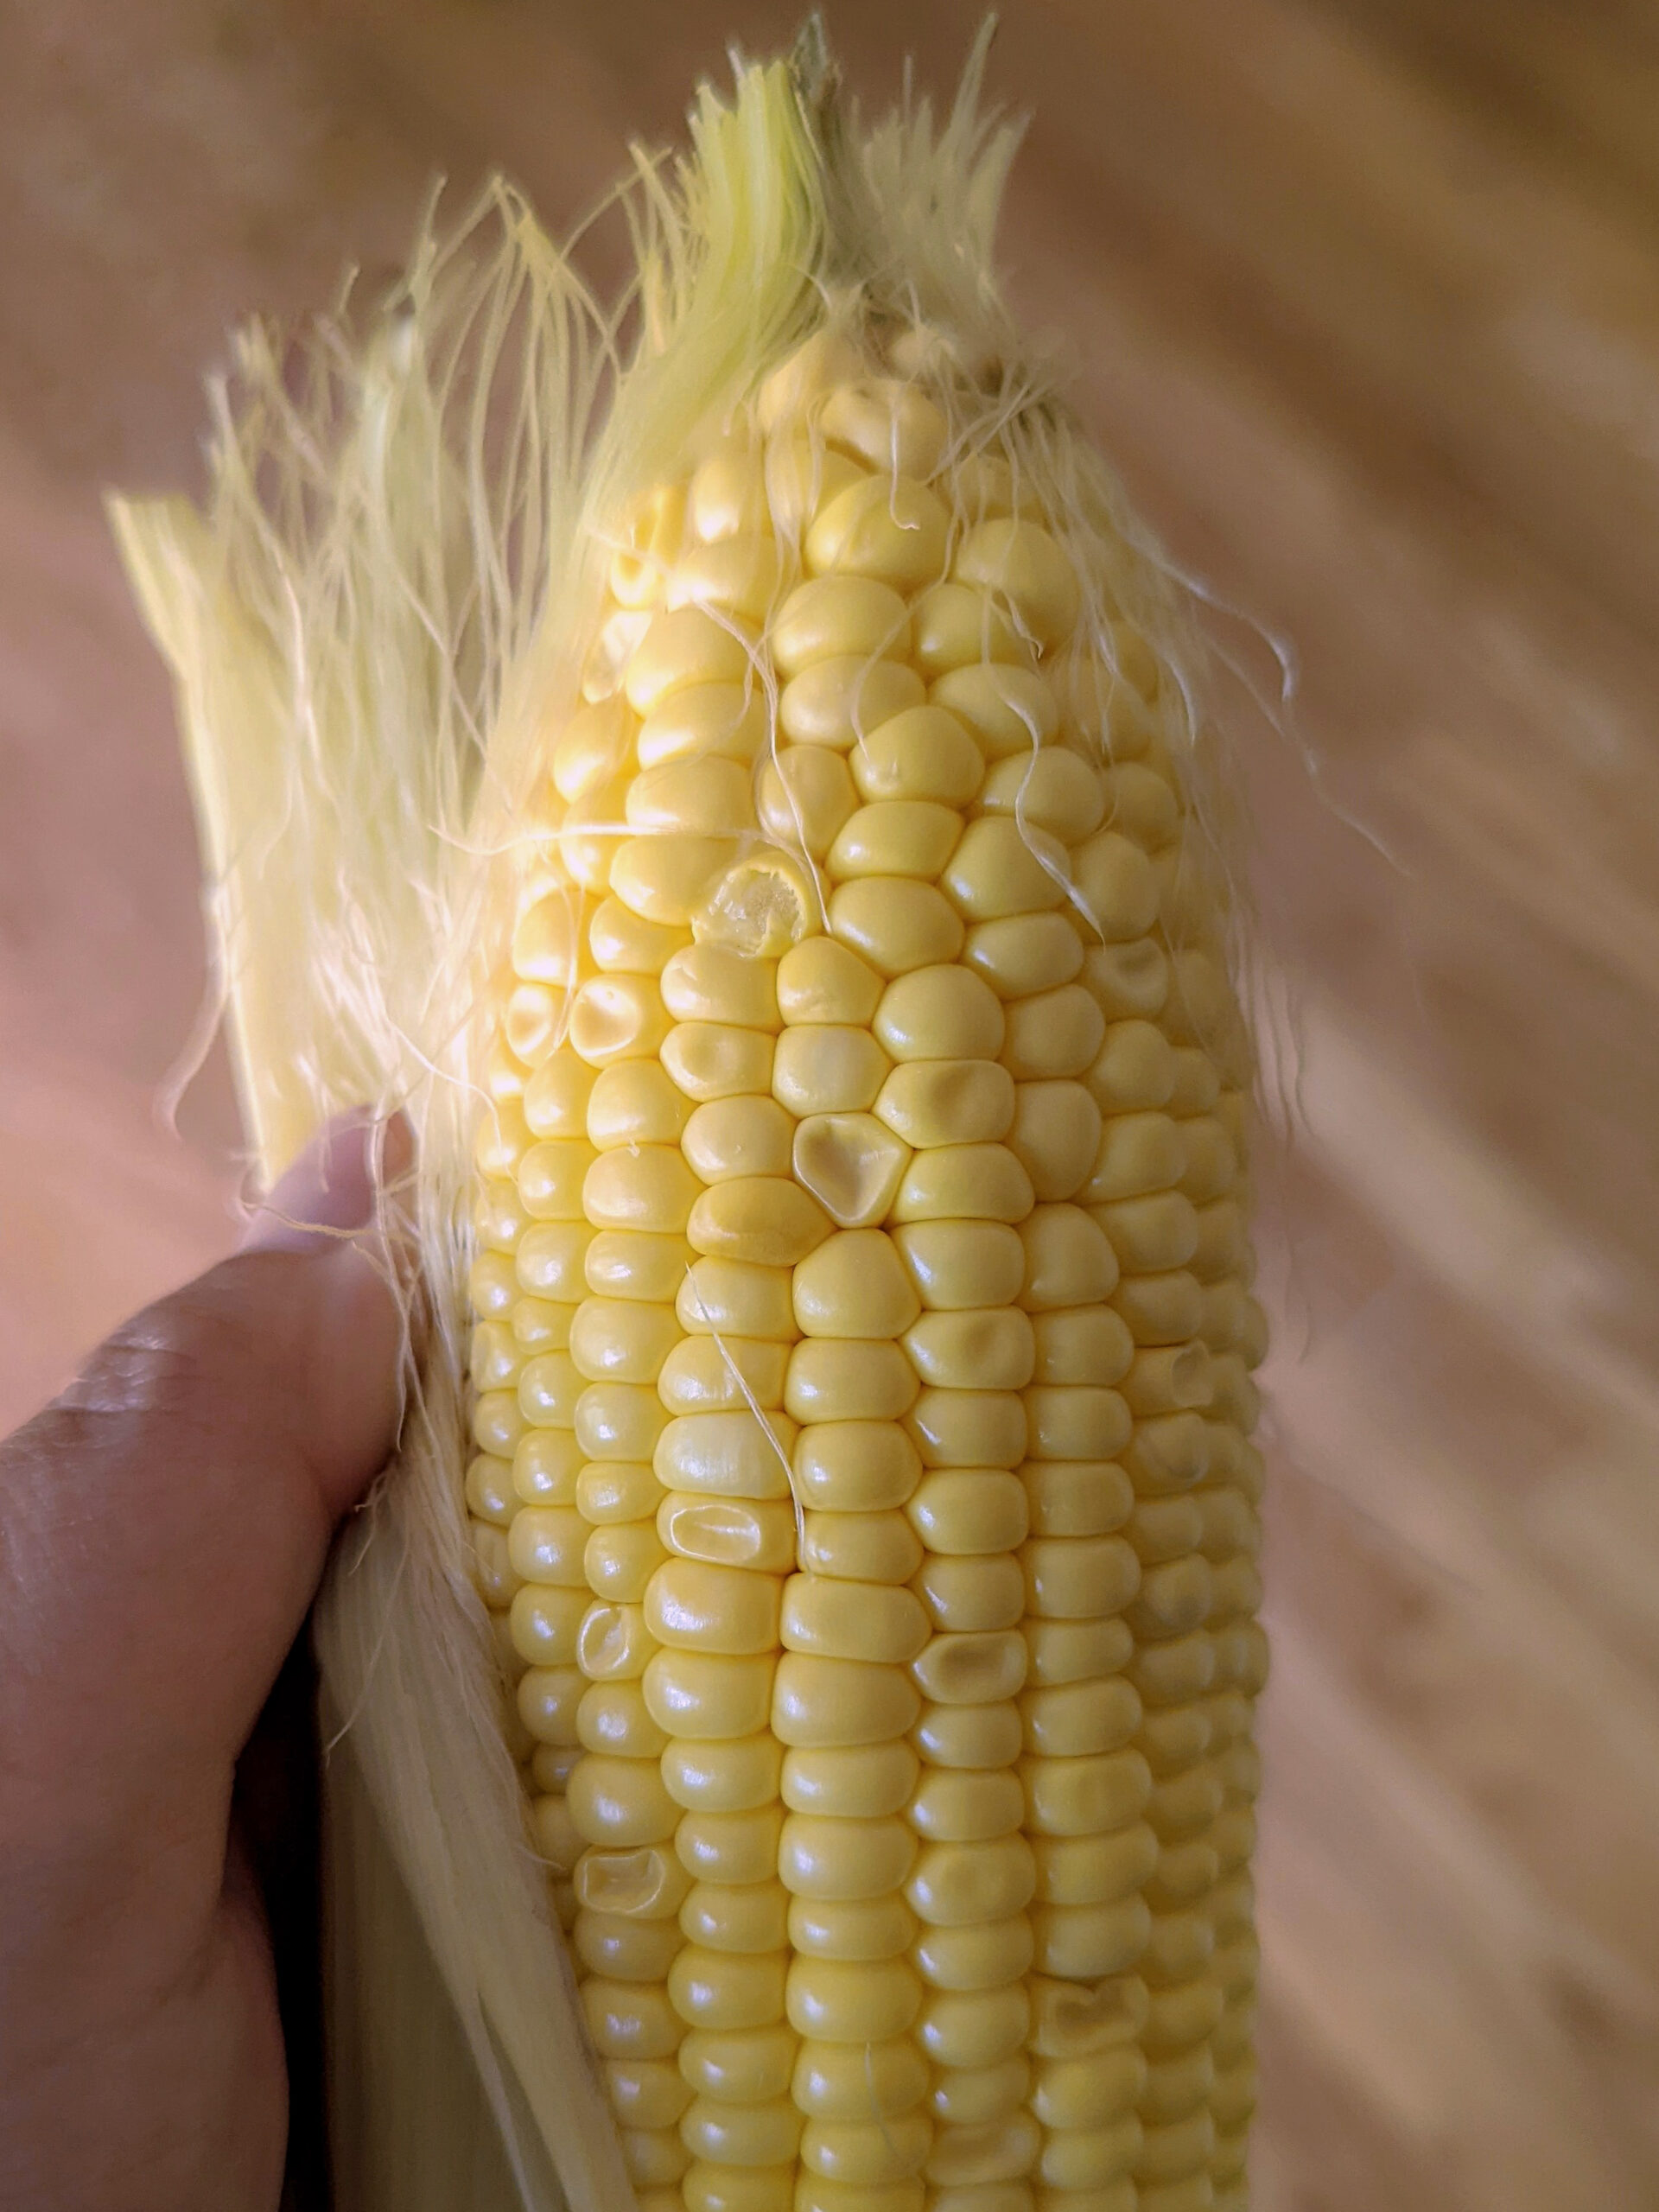 Peeling the husk back to reveal the corn on the cob.